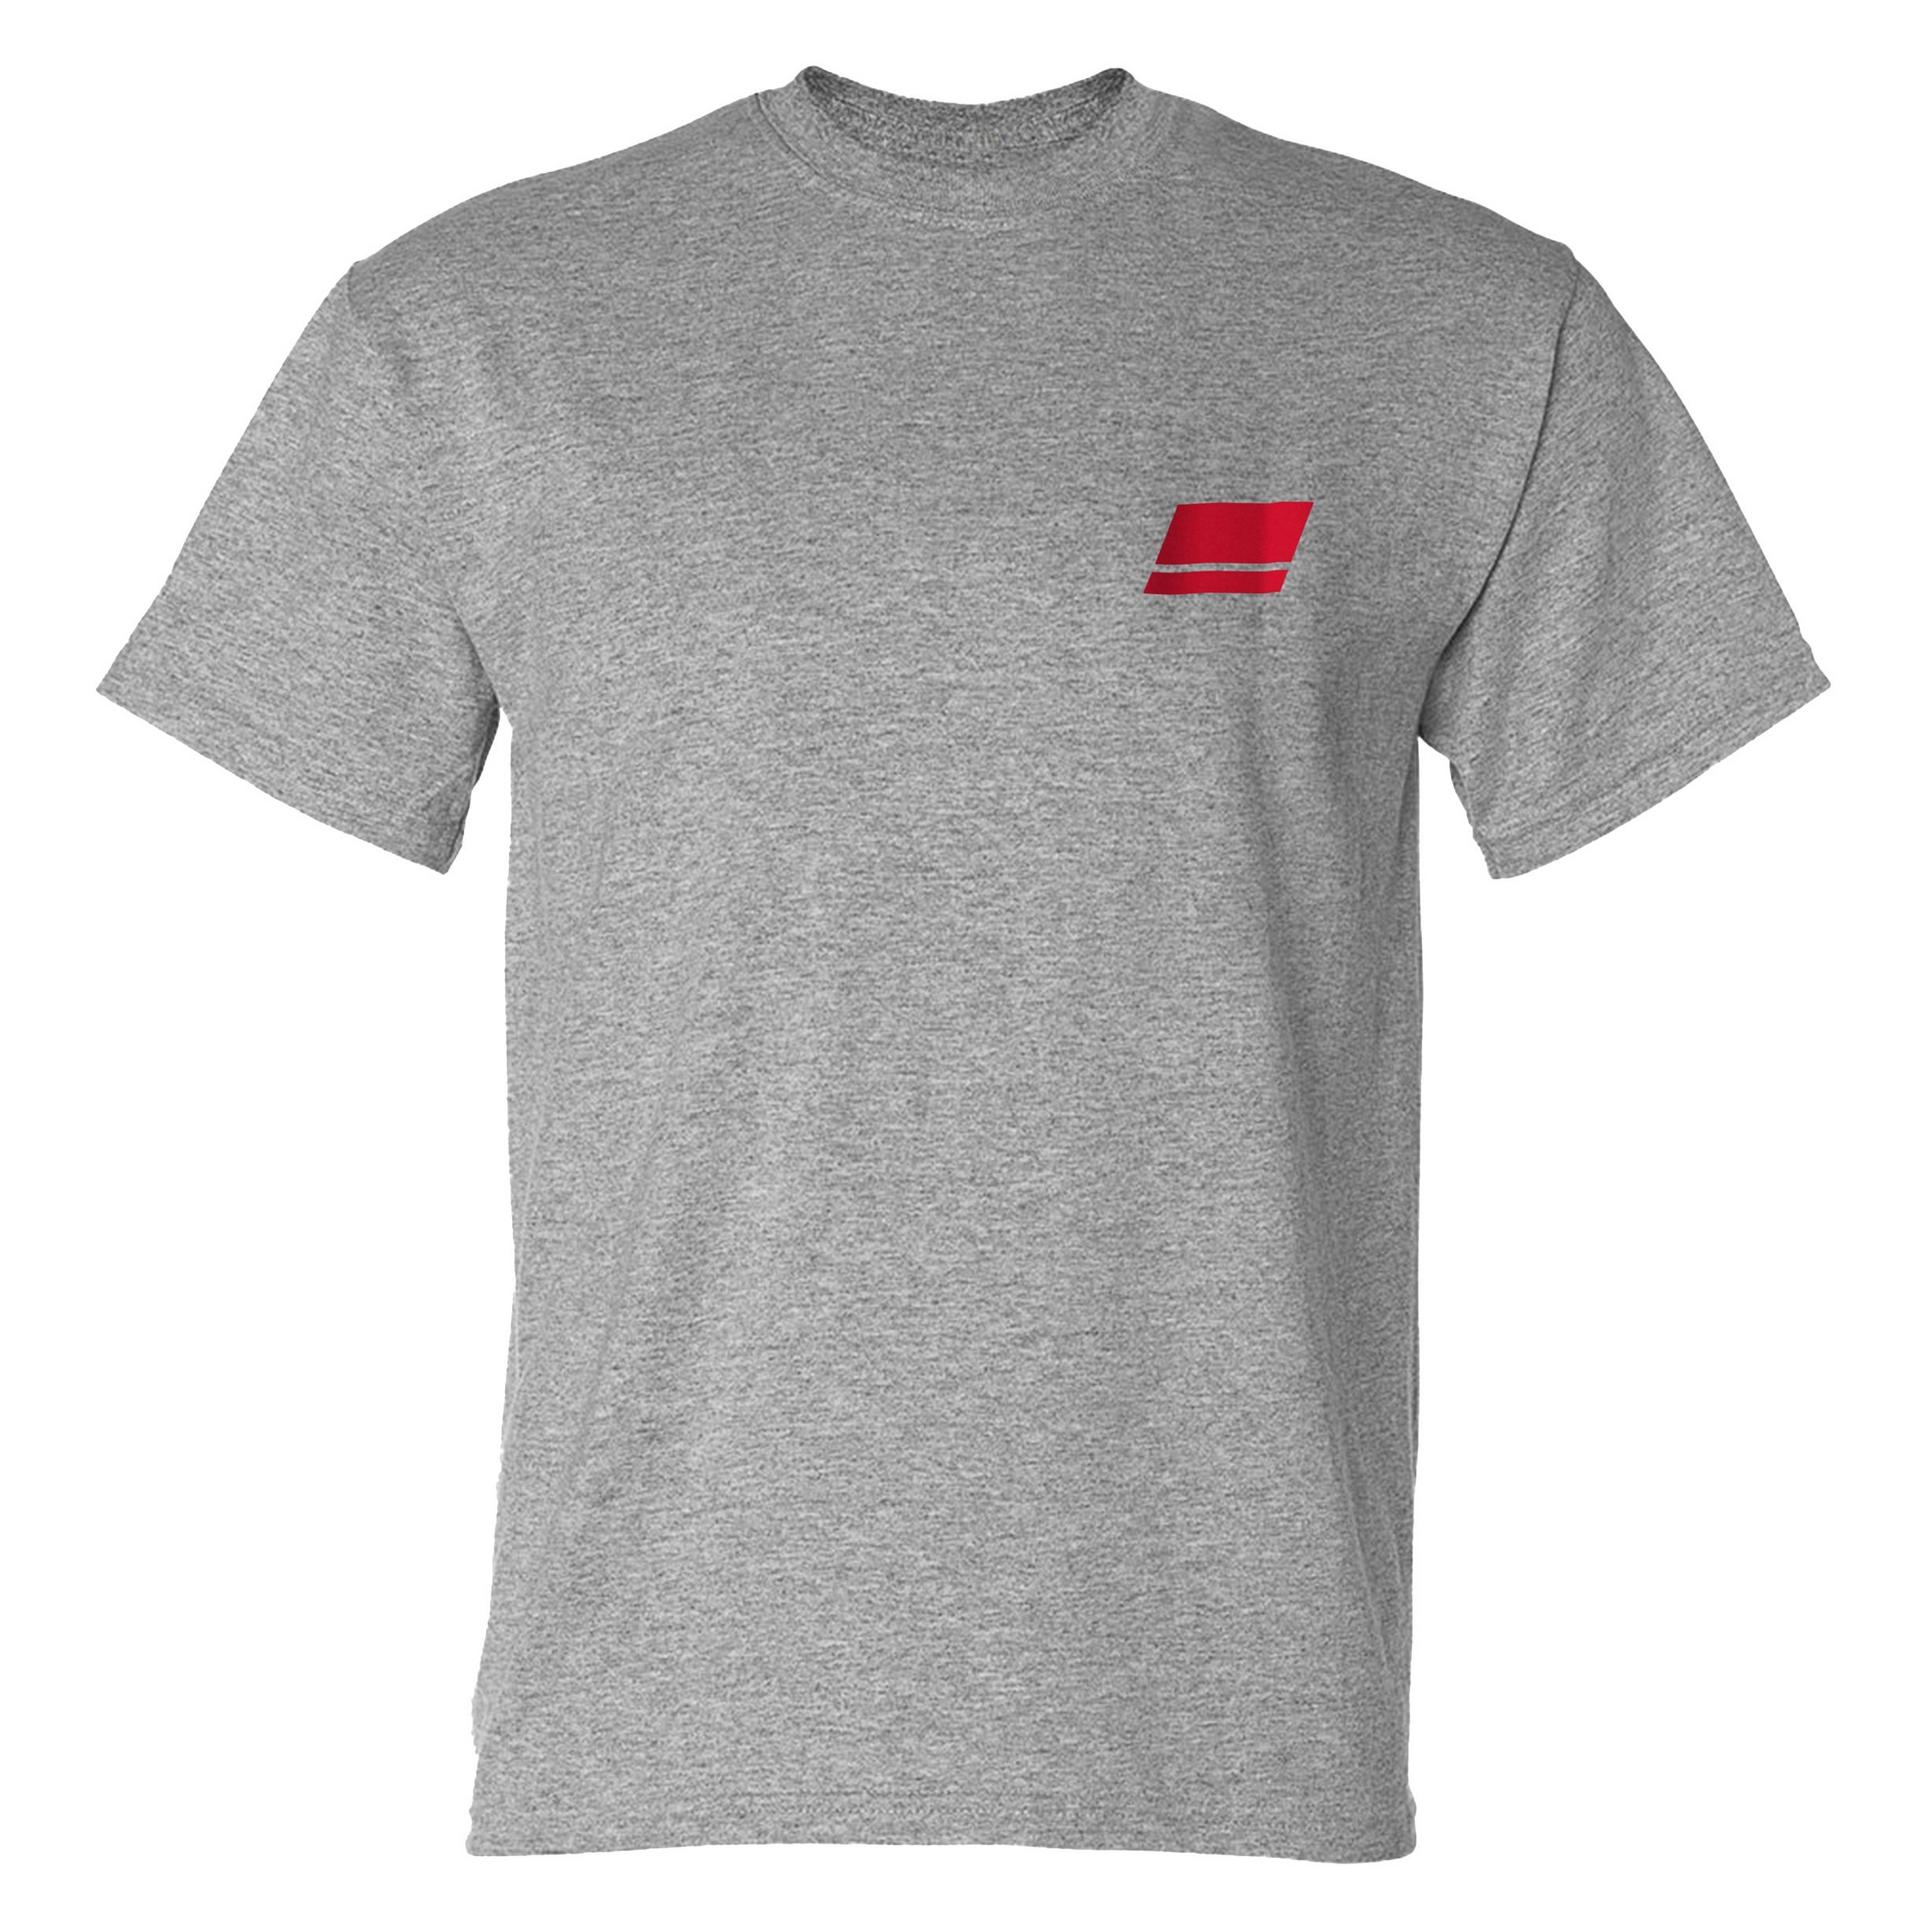 Patch Logo Short Sleeve T-Shirt | Abu Garcia®